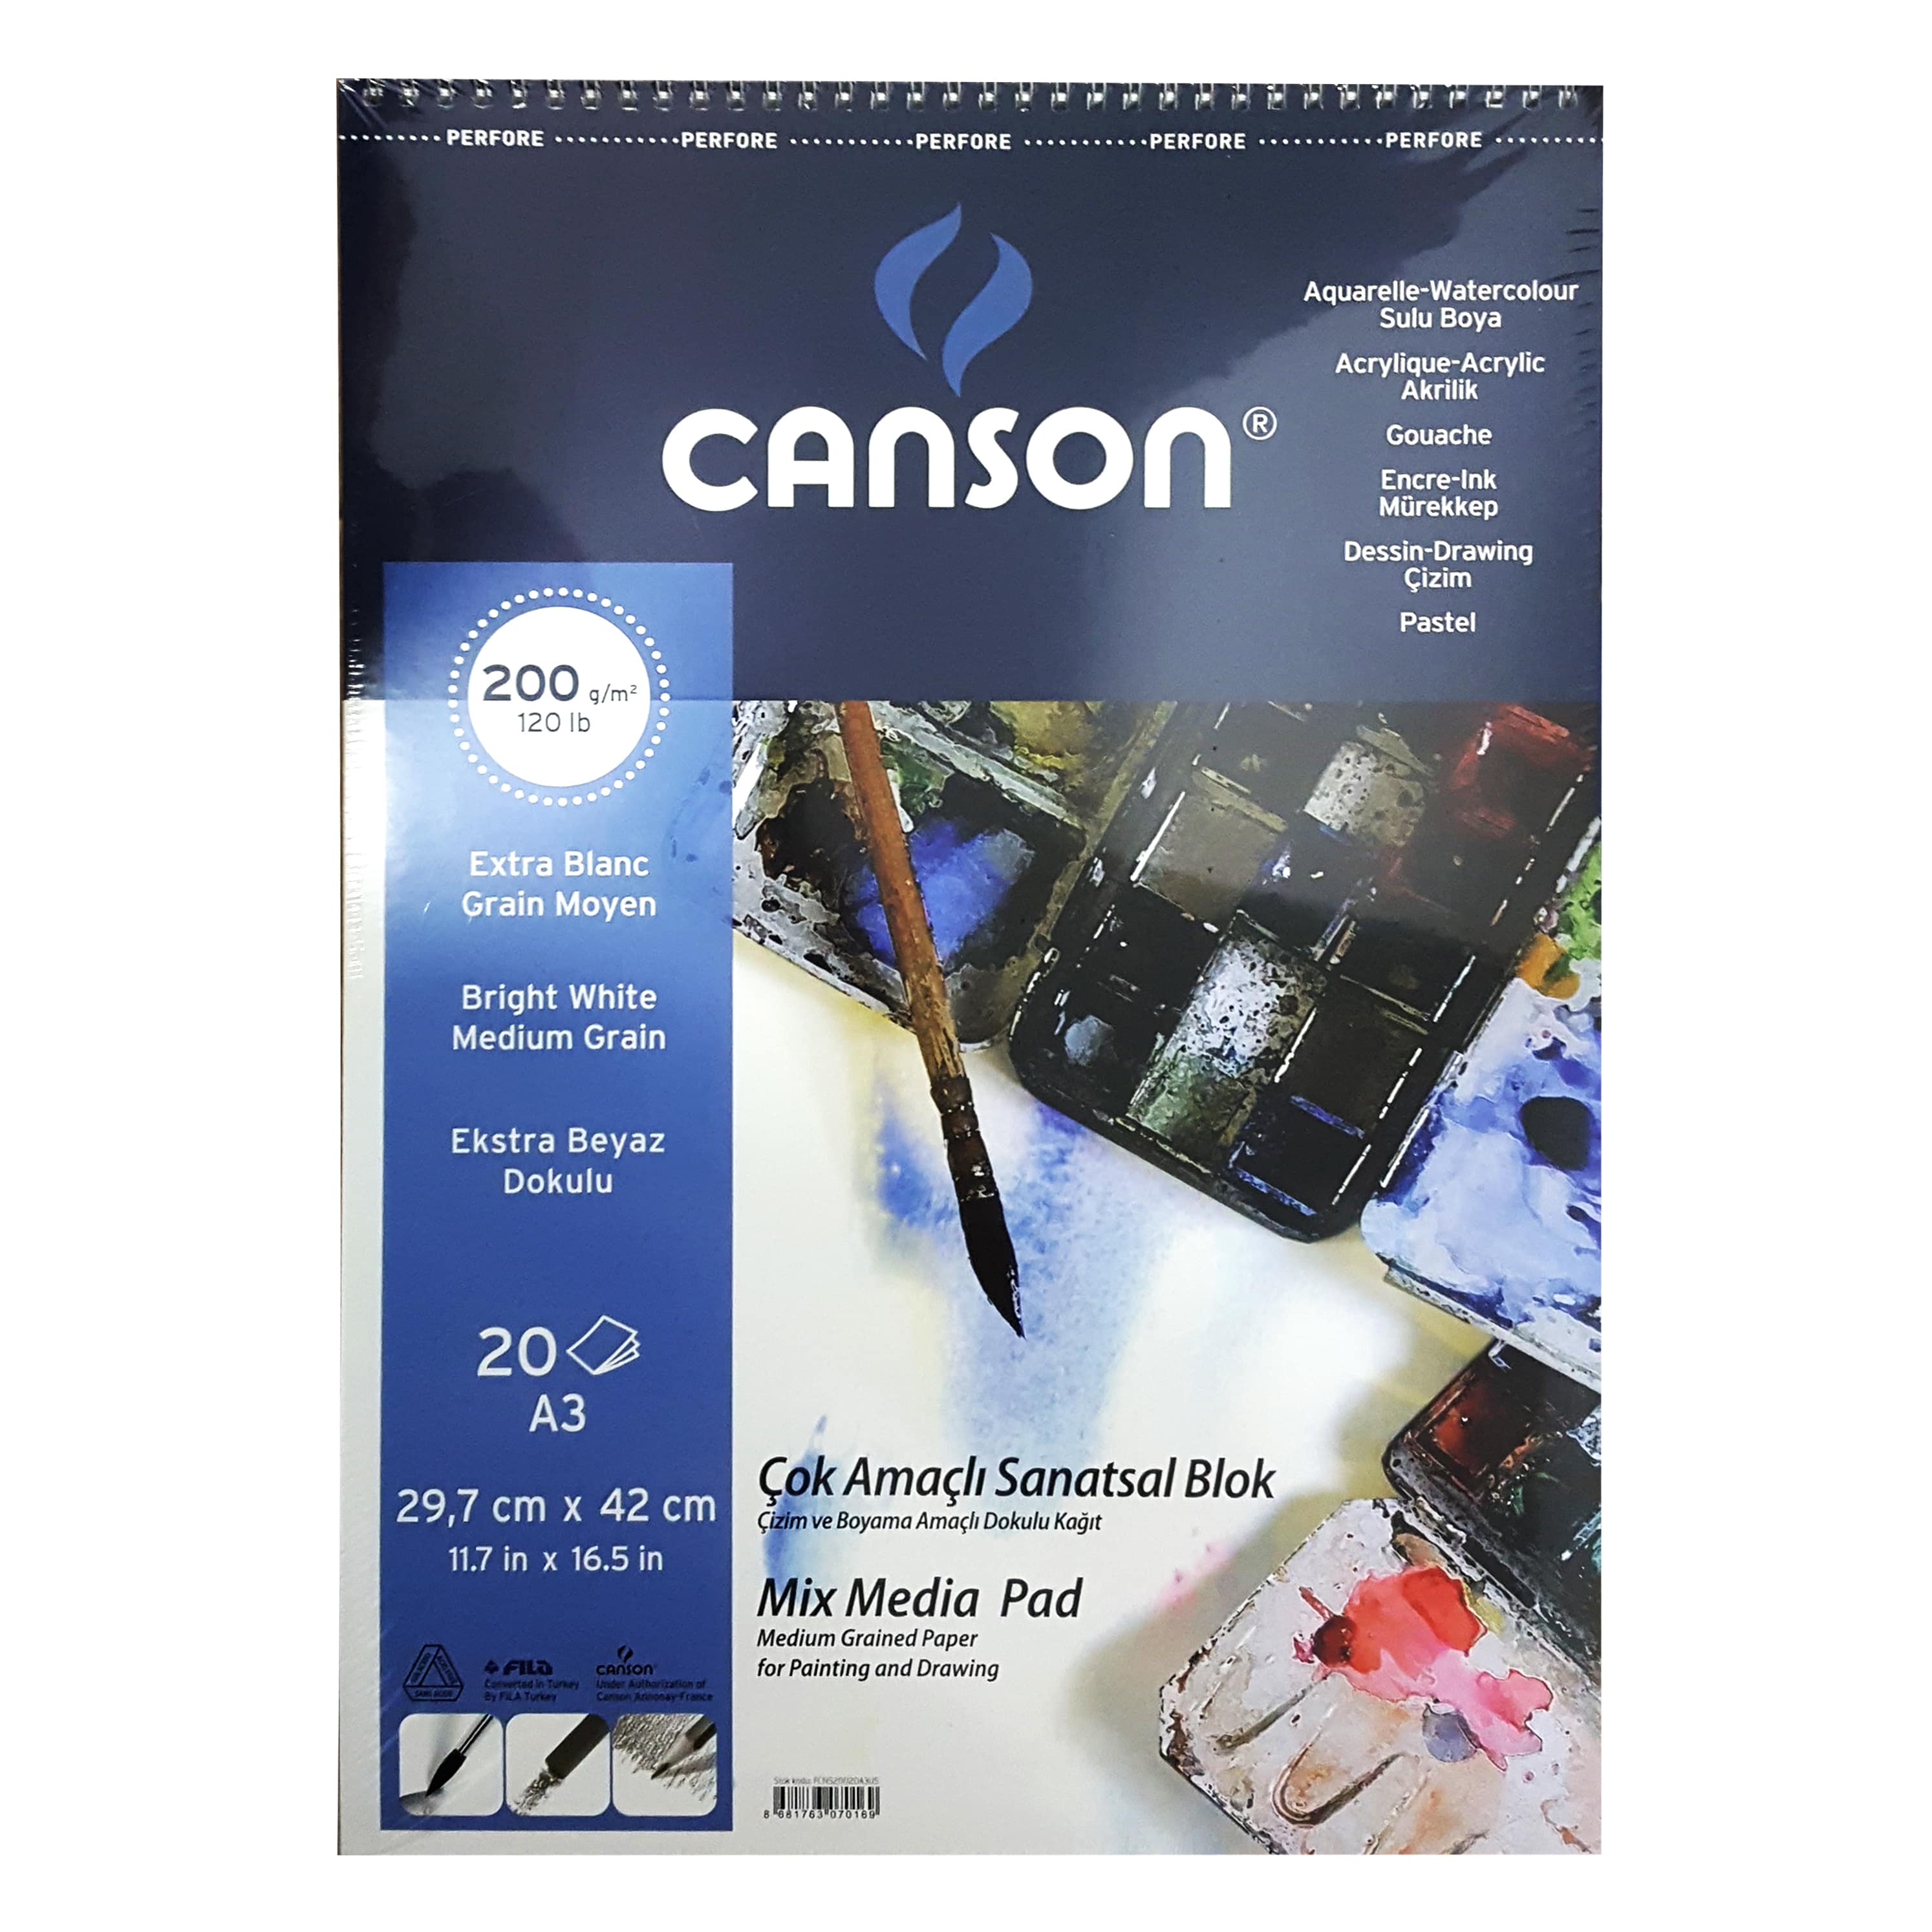 Canson Mix Media Pad Çok Amaçlı Resim Defteri (A3) 200gr 20 Sayfa